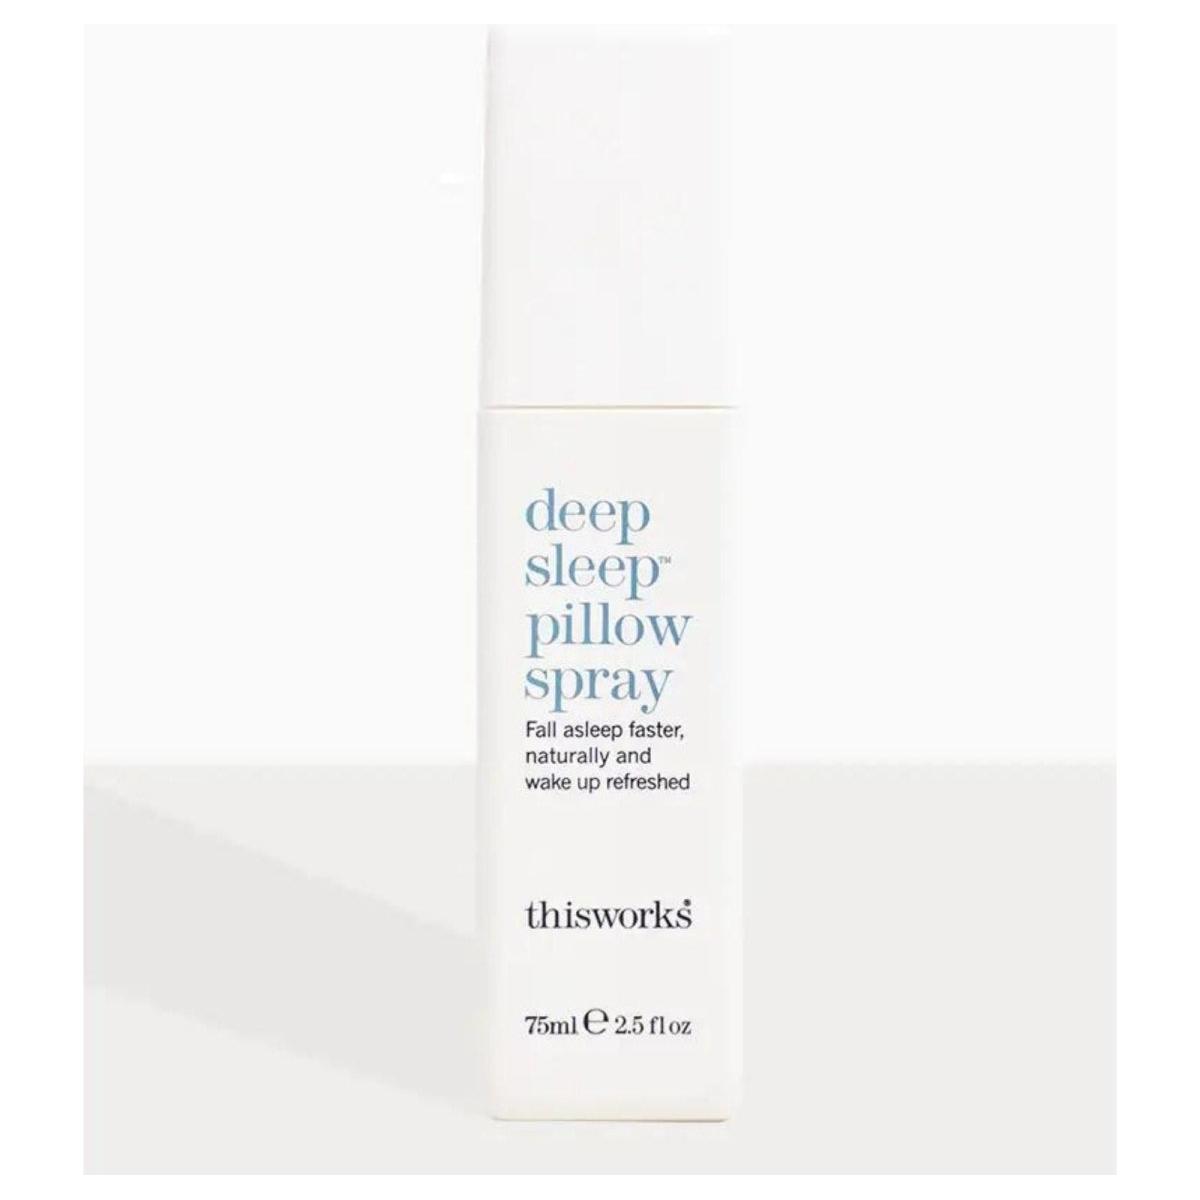 this works | Deep Sleep Pillow Spray | 75ml - DG International Ventures Limited